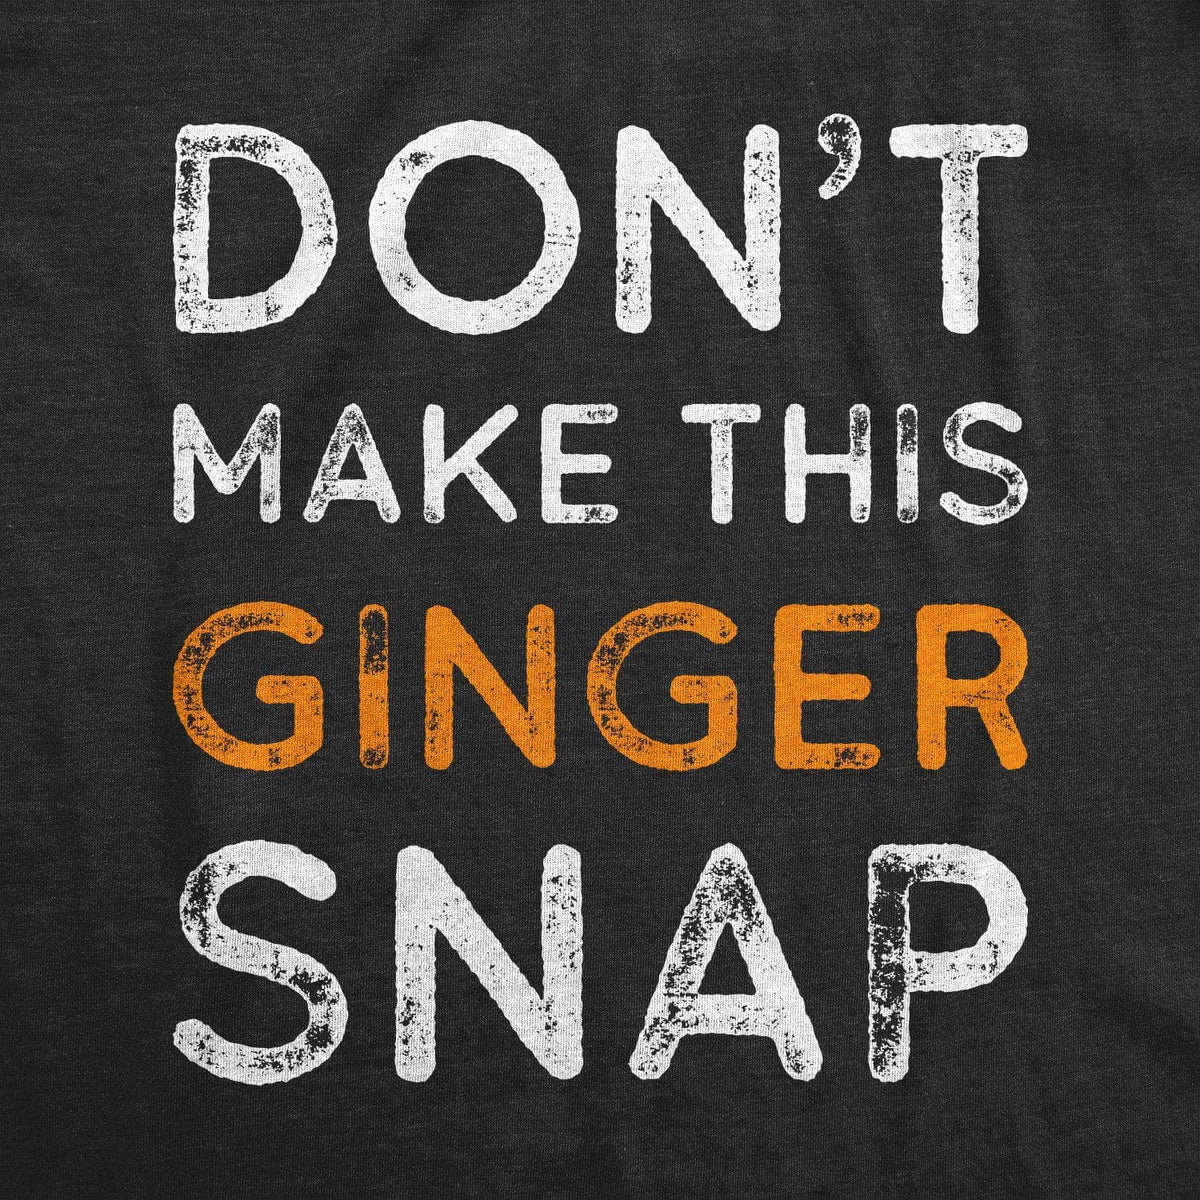 Don&#39;t Make This Ginger Snap Men&#39;s Tshirt  -  Crazy Dog T-Shirts